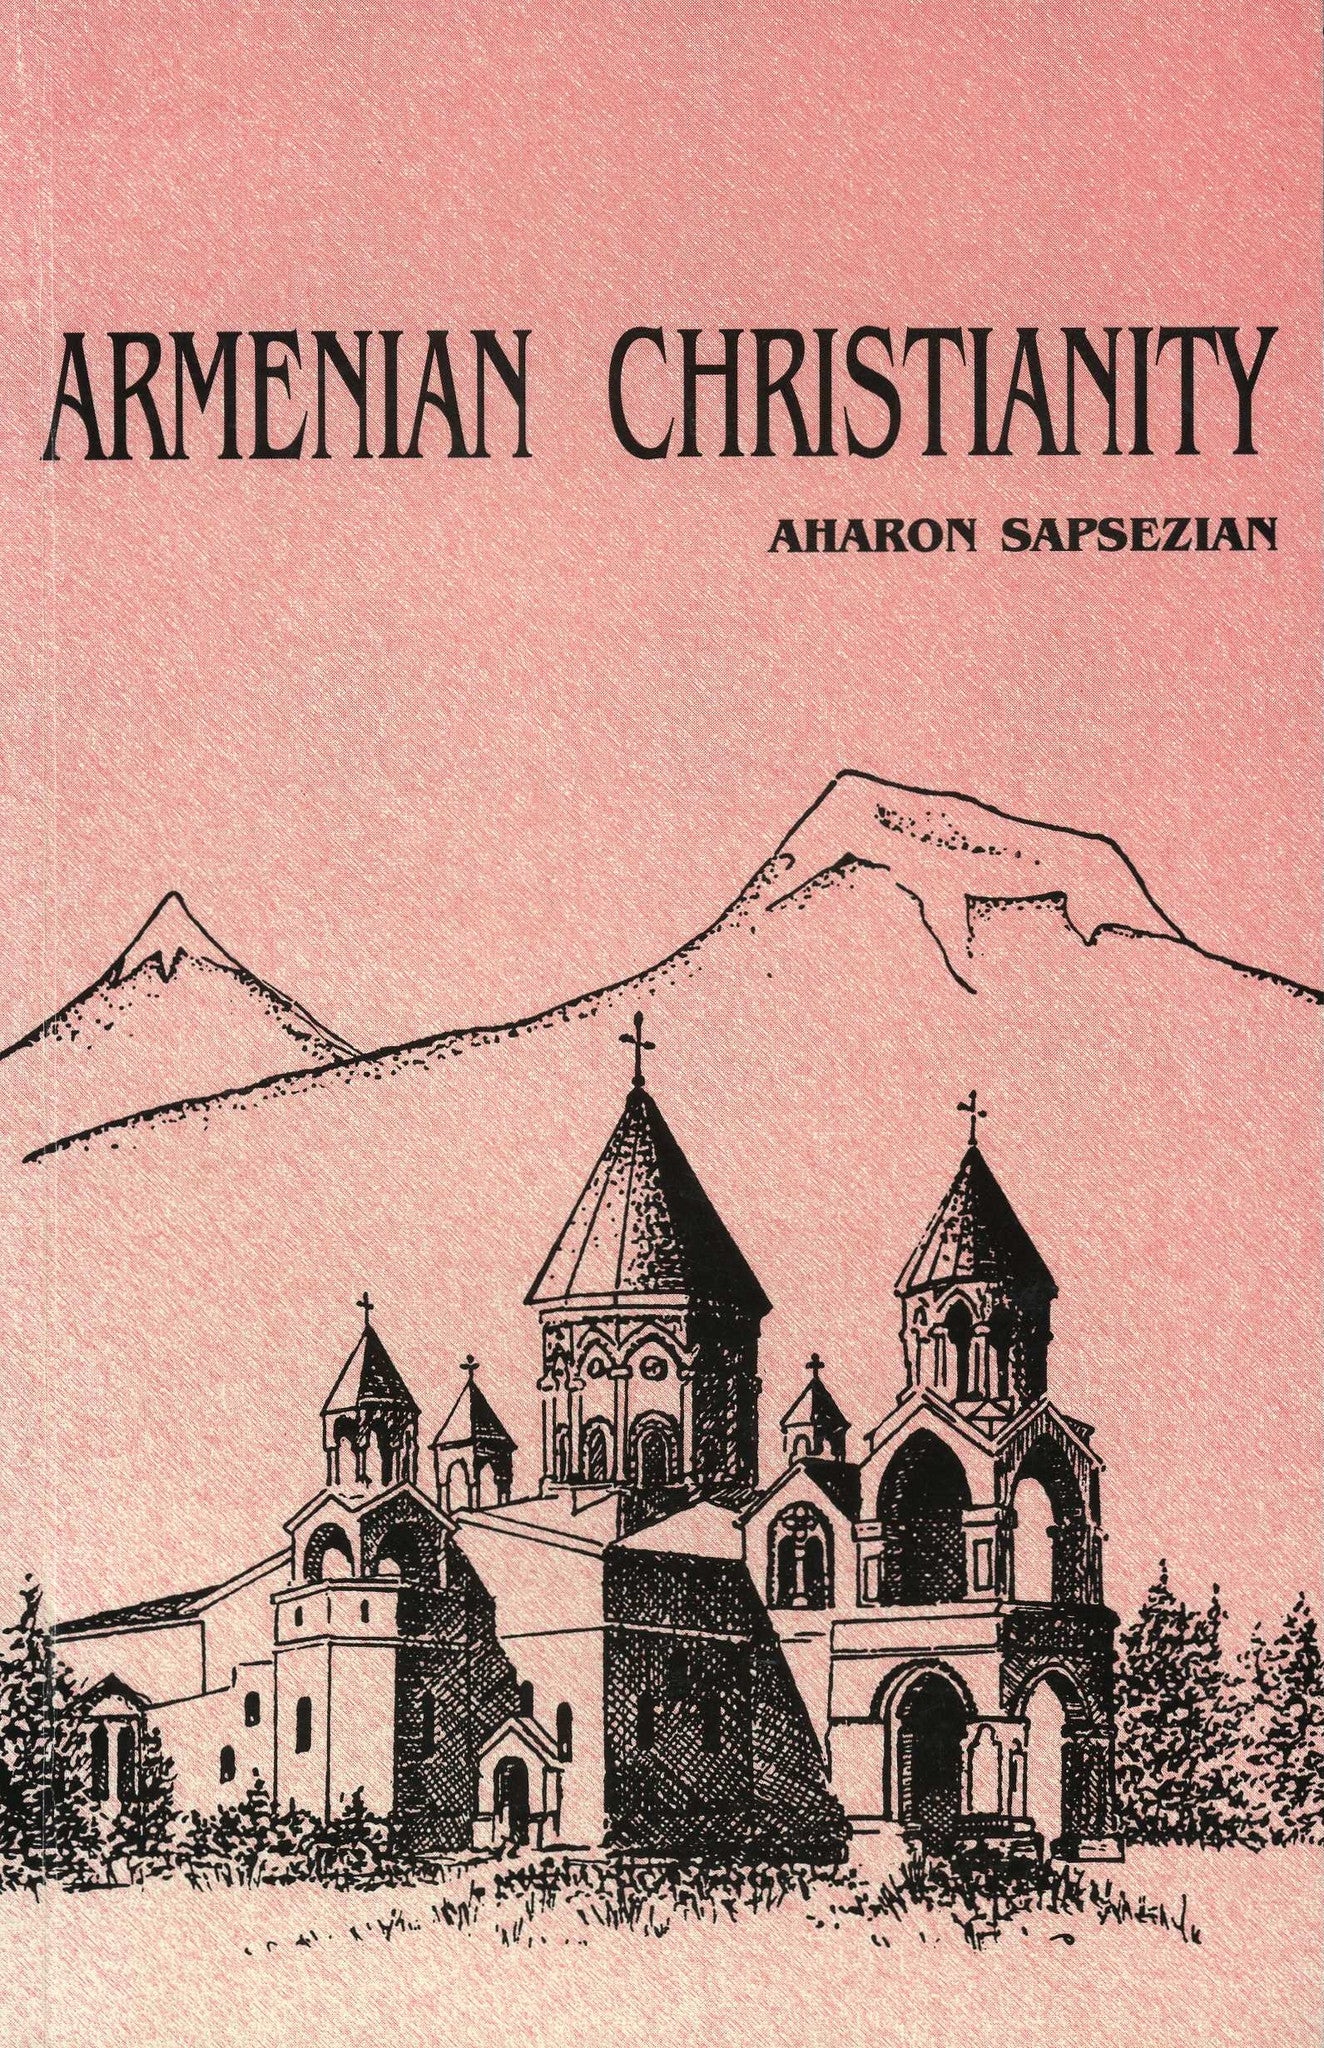 ARMENIAN CHRISTIANITY